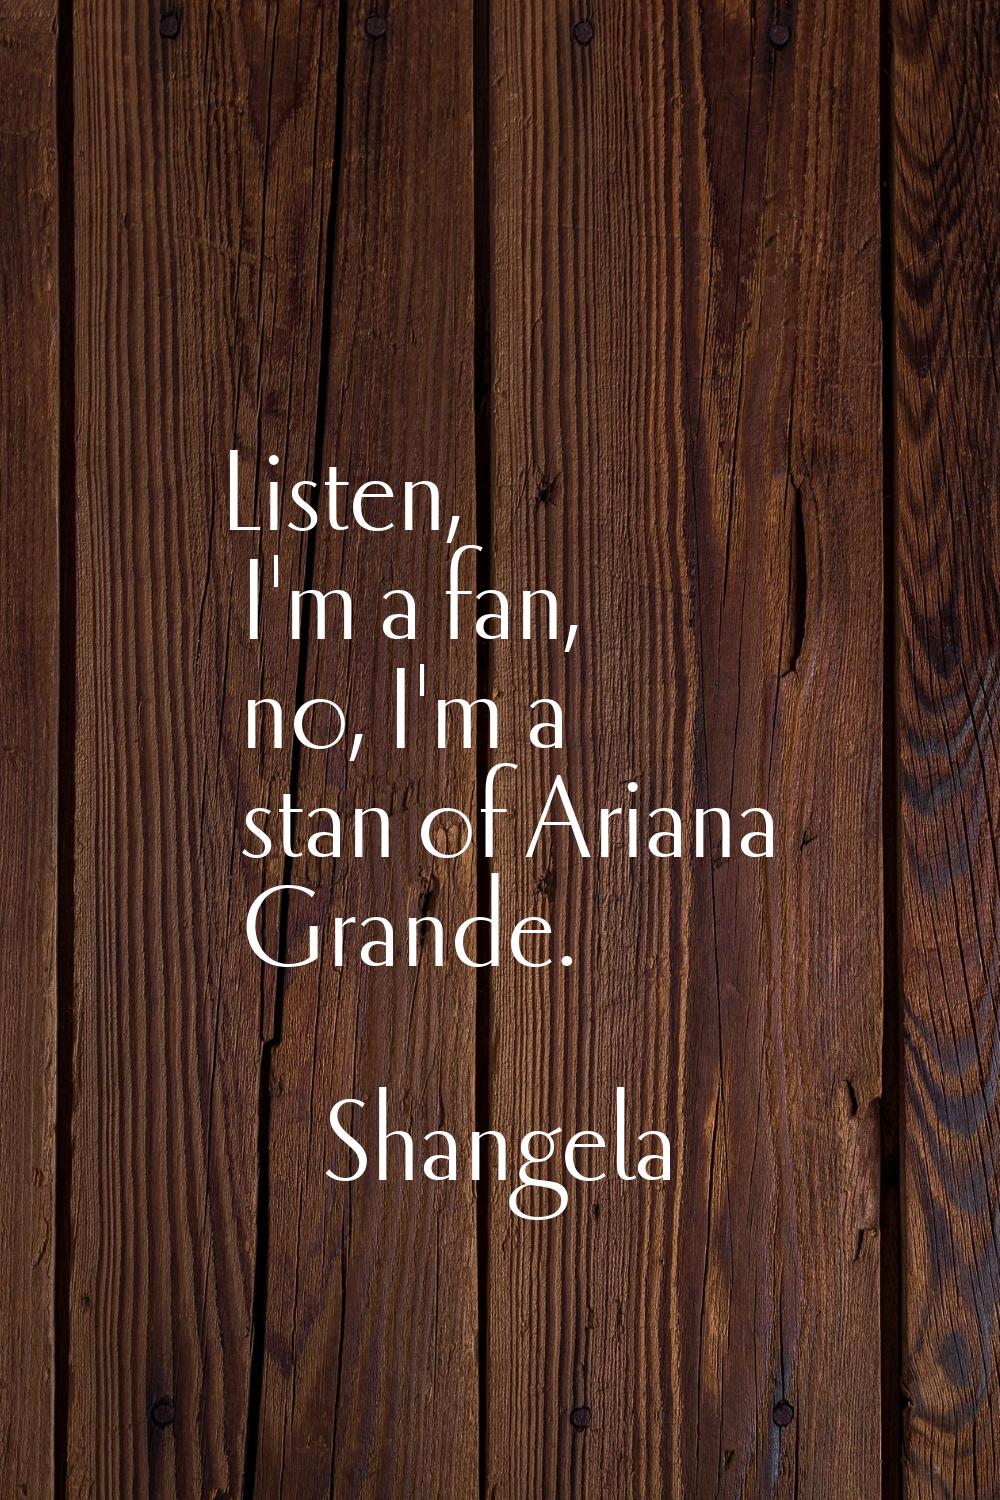 Listen, I'm a fan, no, I'm a stan of Ariana Grande.